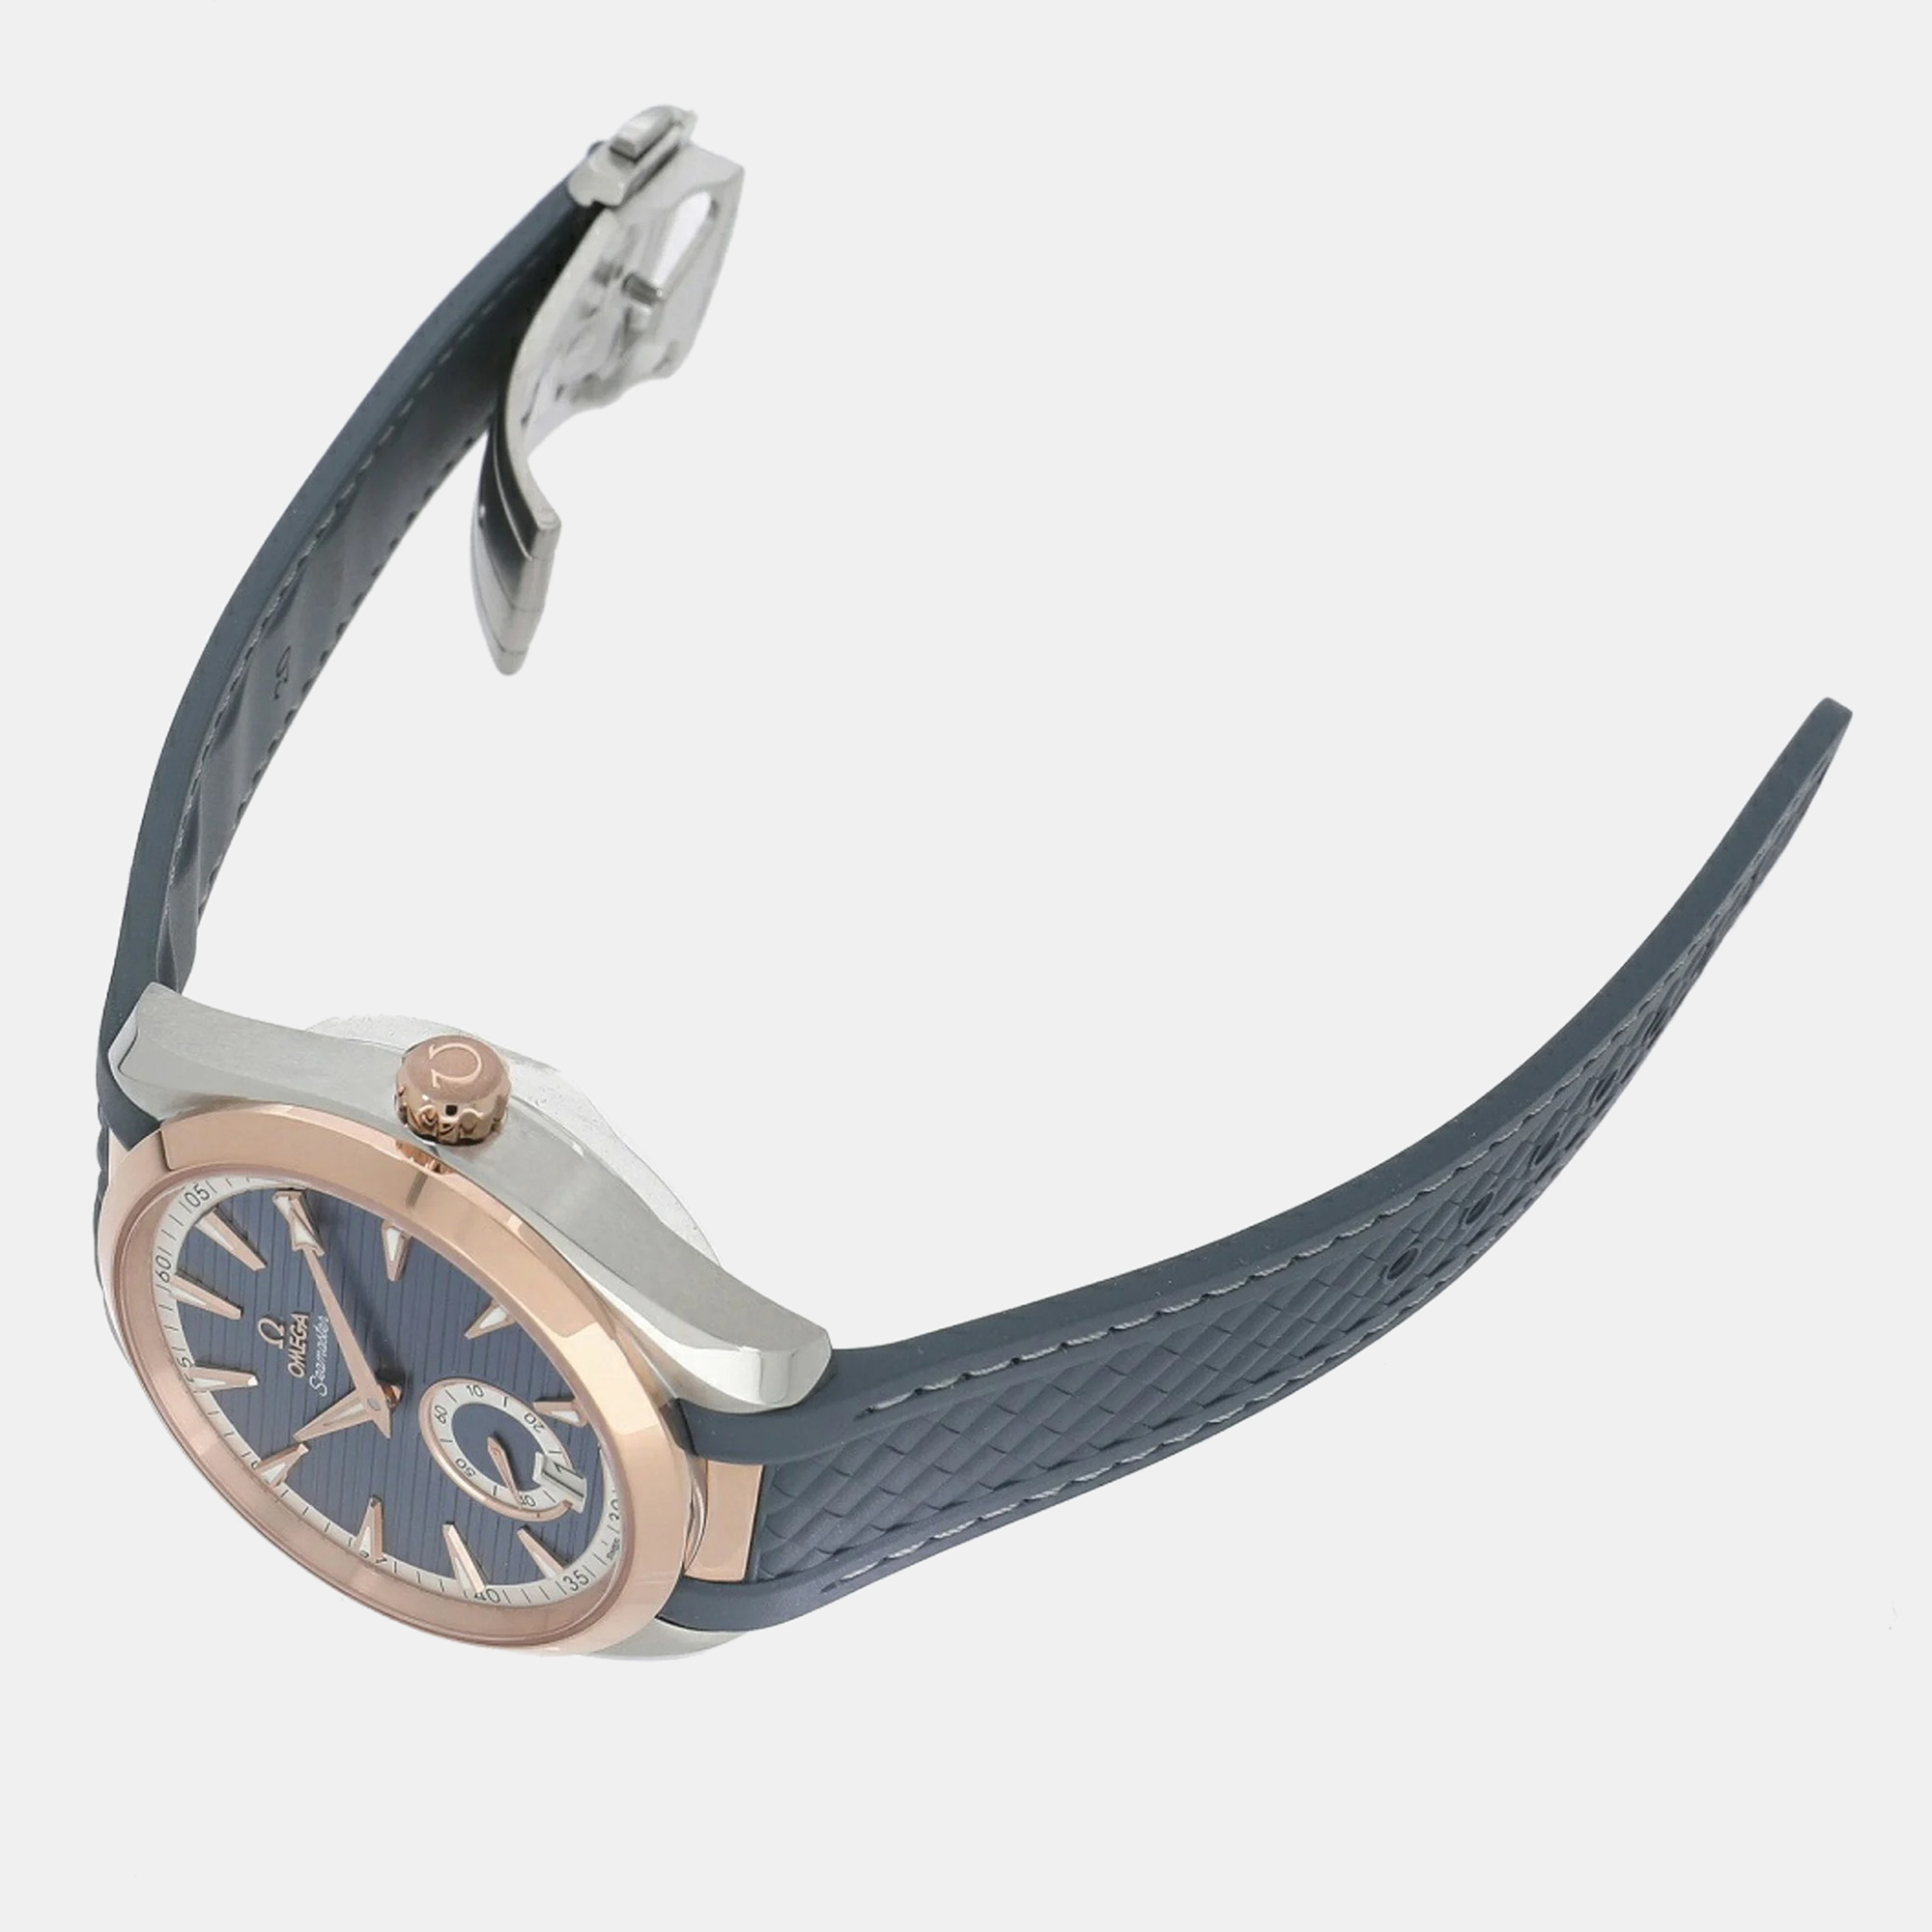 Omega Blue Stainless Steel Seamaster Aqua Terra 220.22.41.21.03.001 Automatic Men's Wristwatch 41 Mm